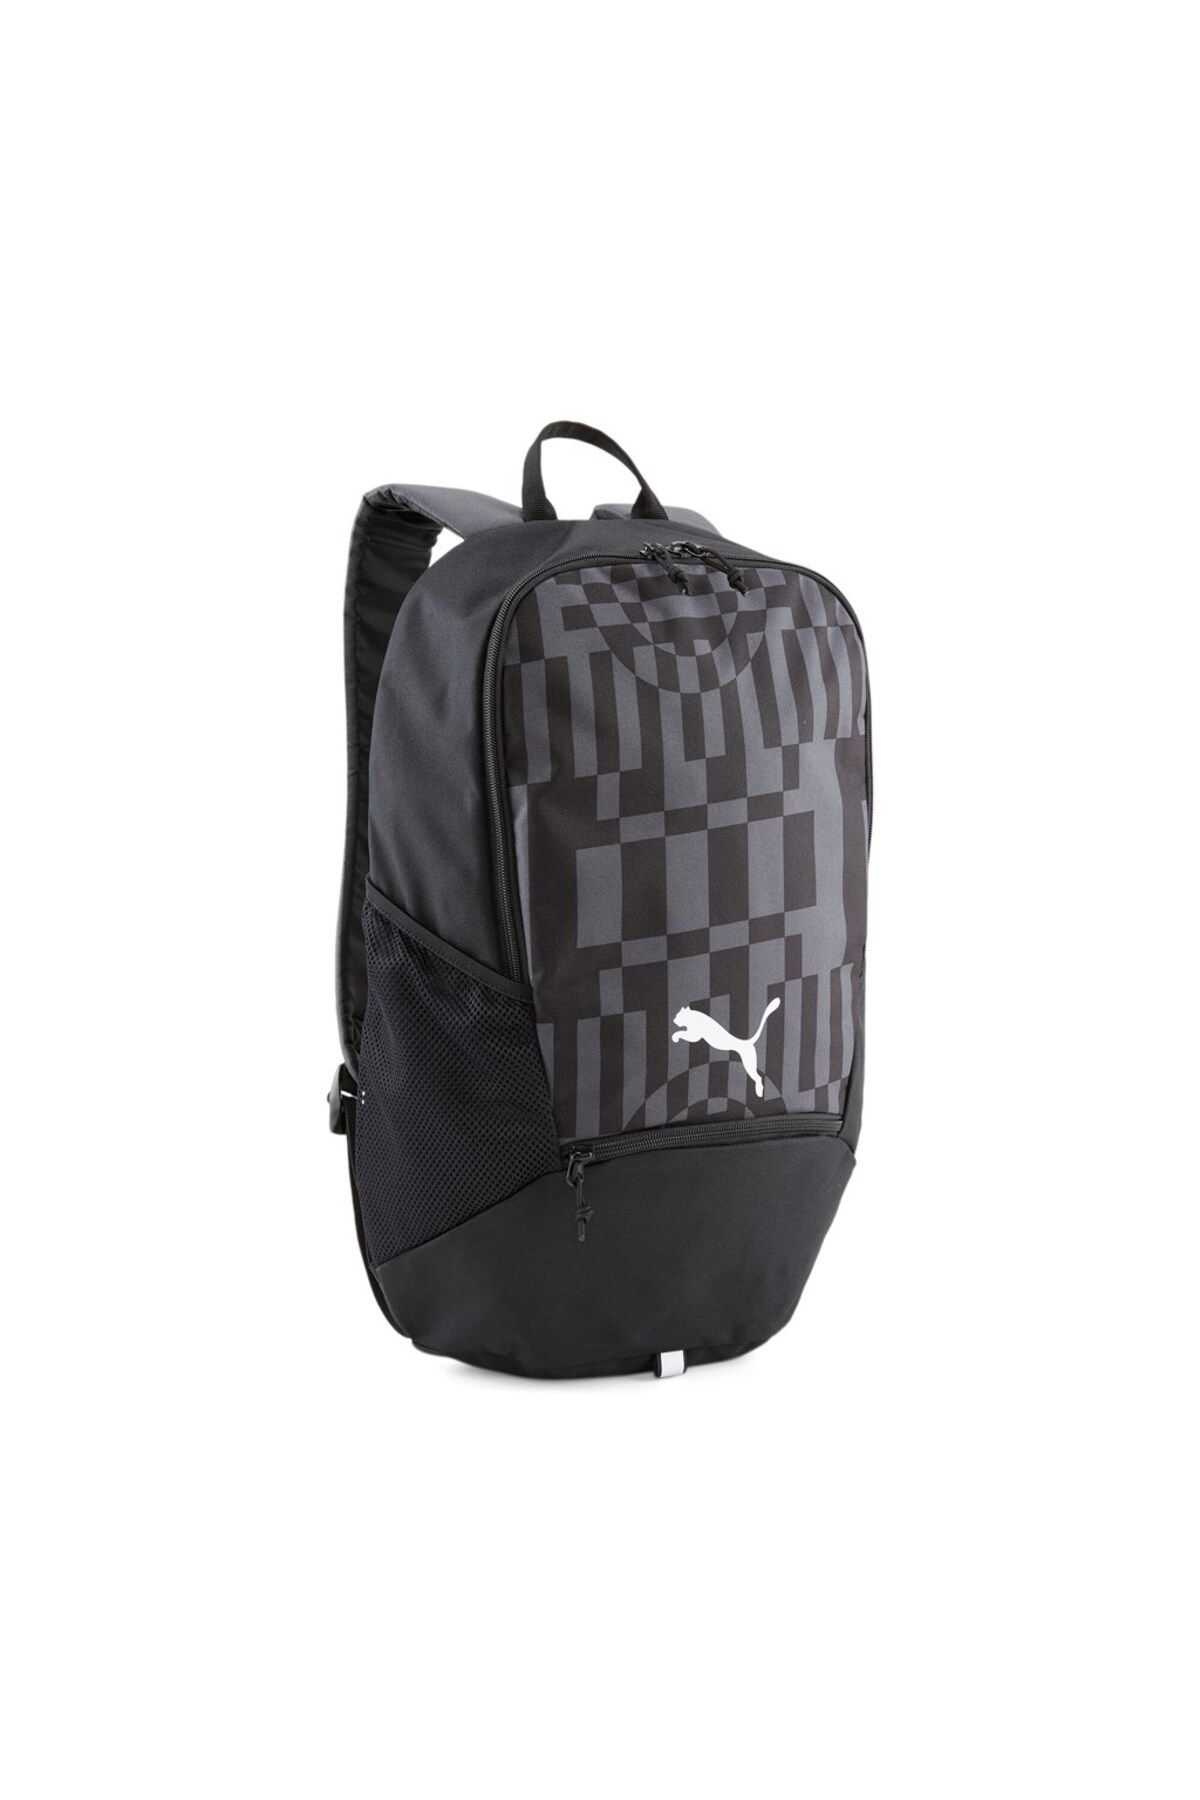 Puma Sırt Çantası Individualrıse Backpack 07991103